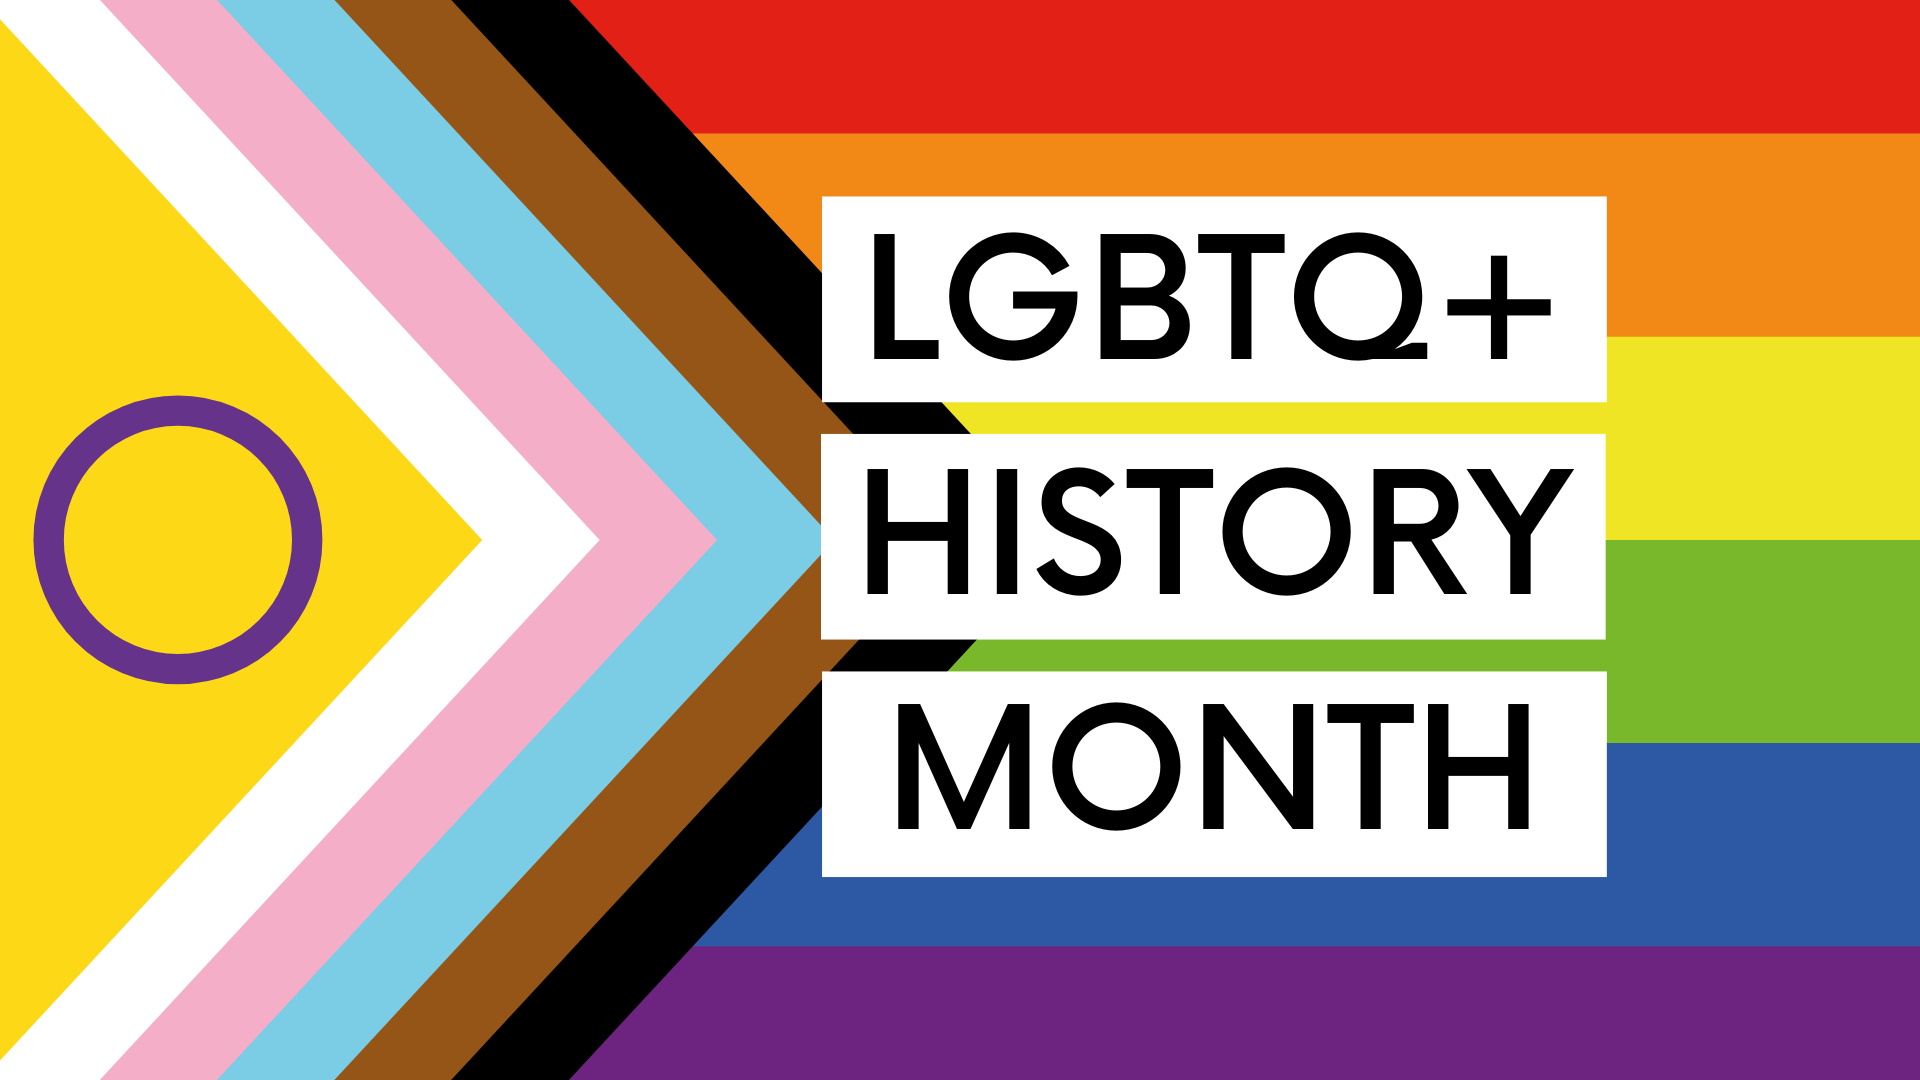 LGBTQ+ History Month programme